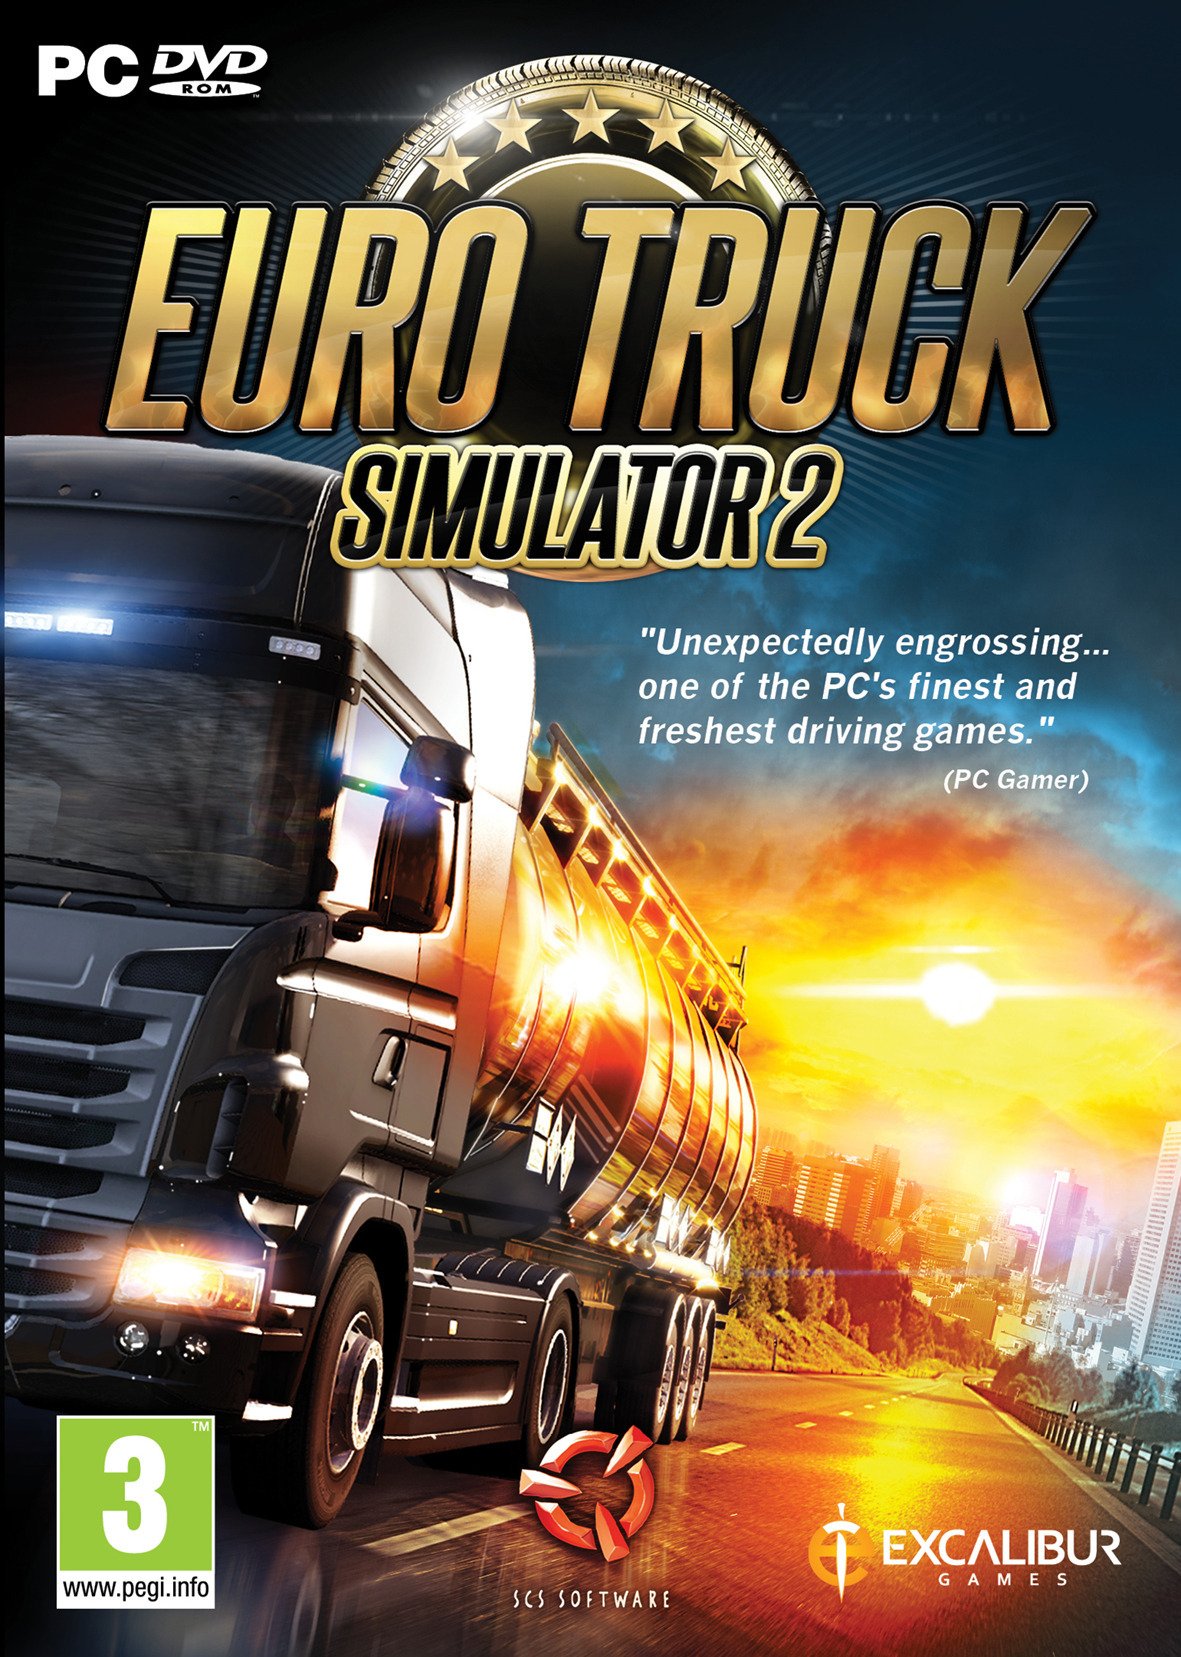 youtube download games euro truck simulator 2